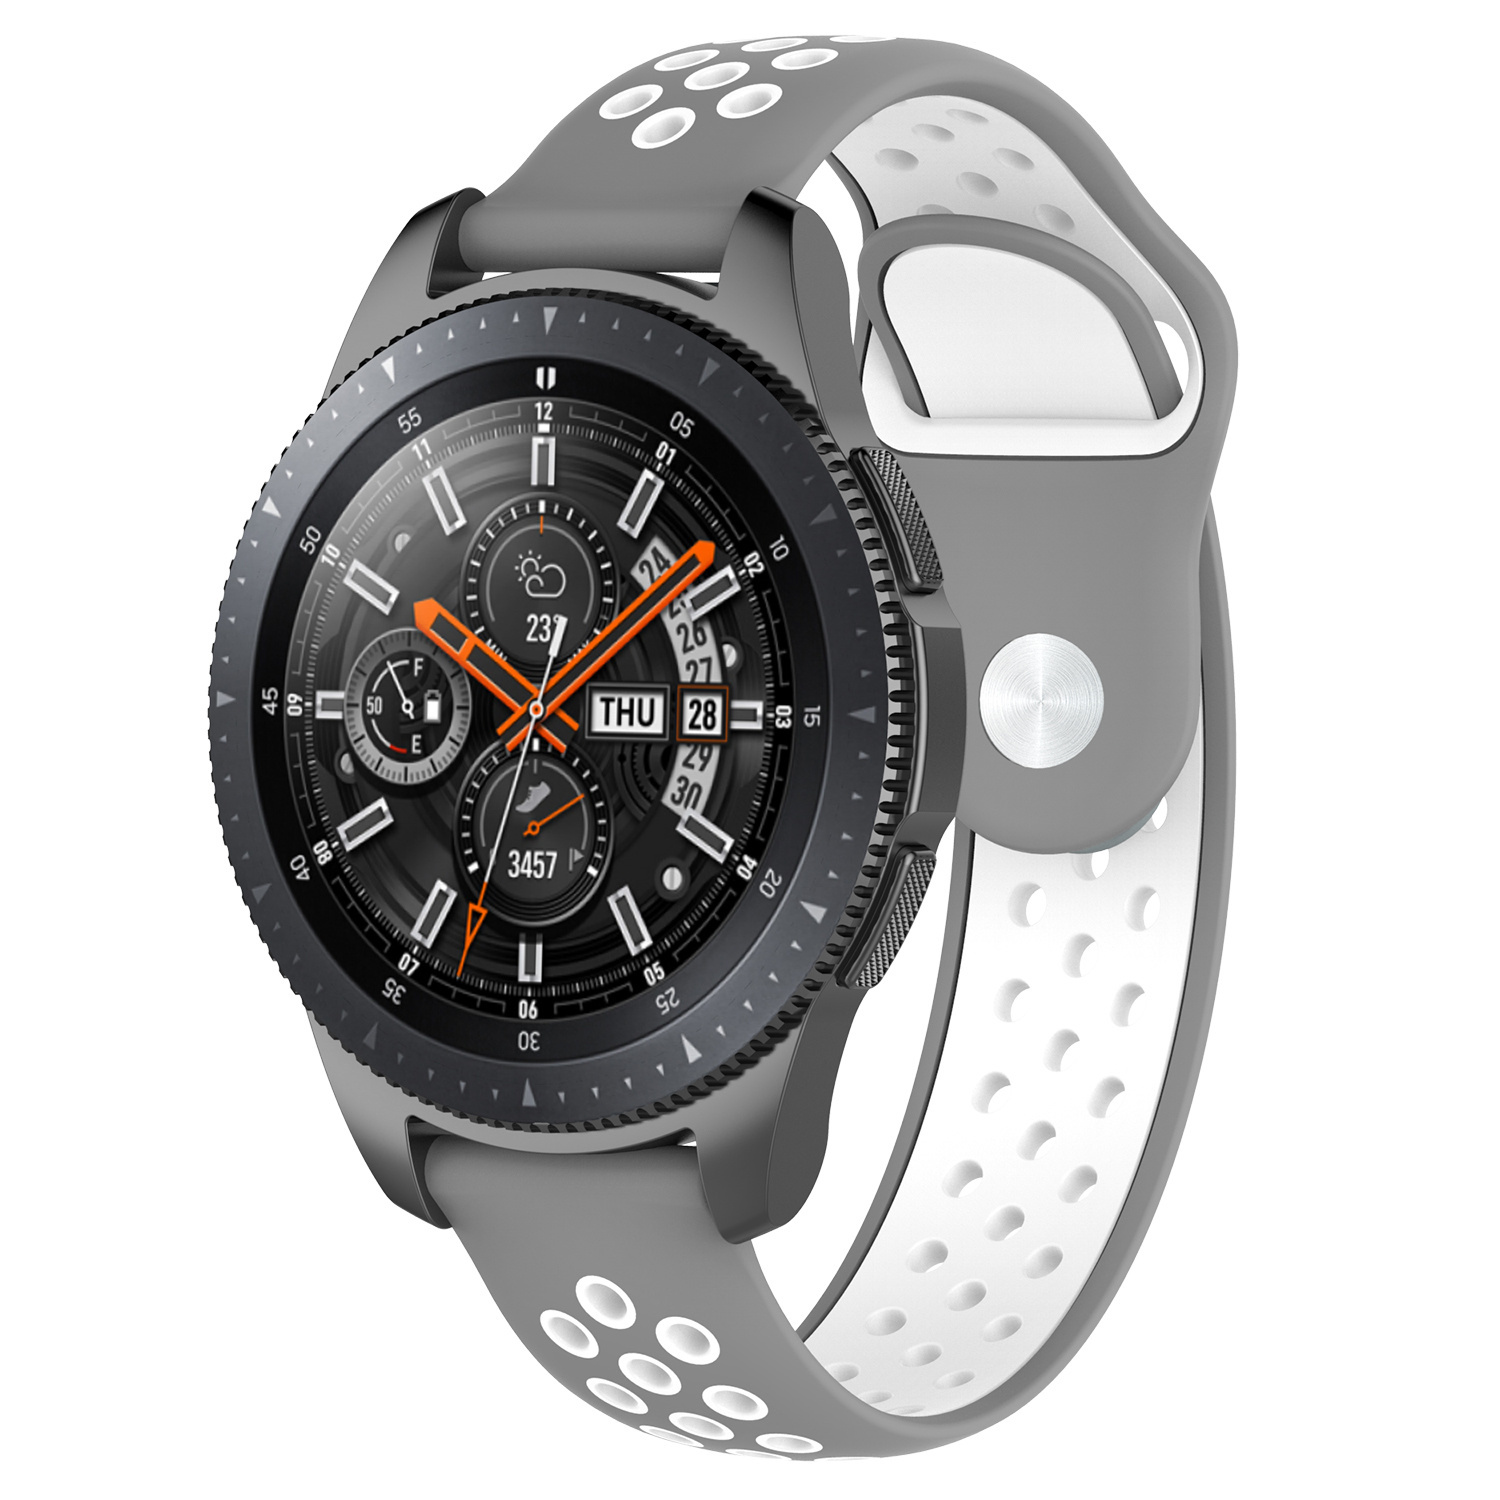 Cinturino doppio sport per Huawei Watch GT - grigio bianco